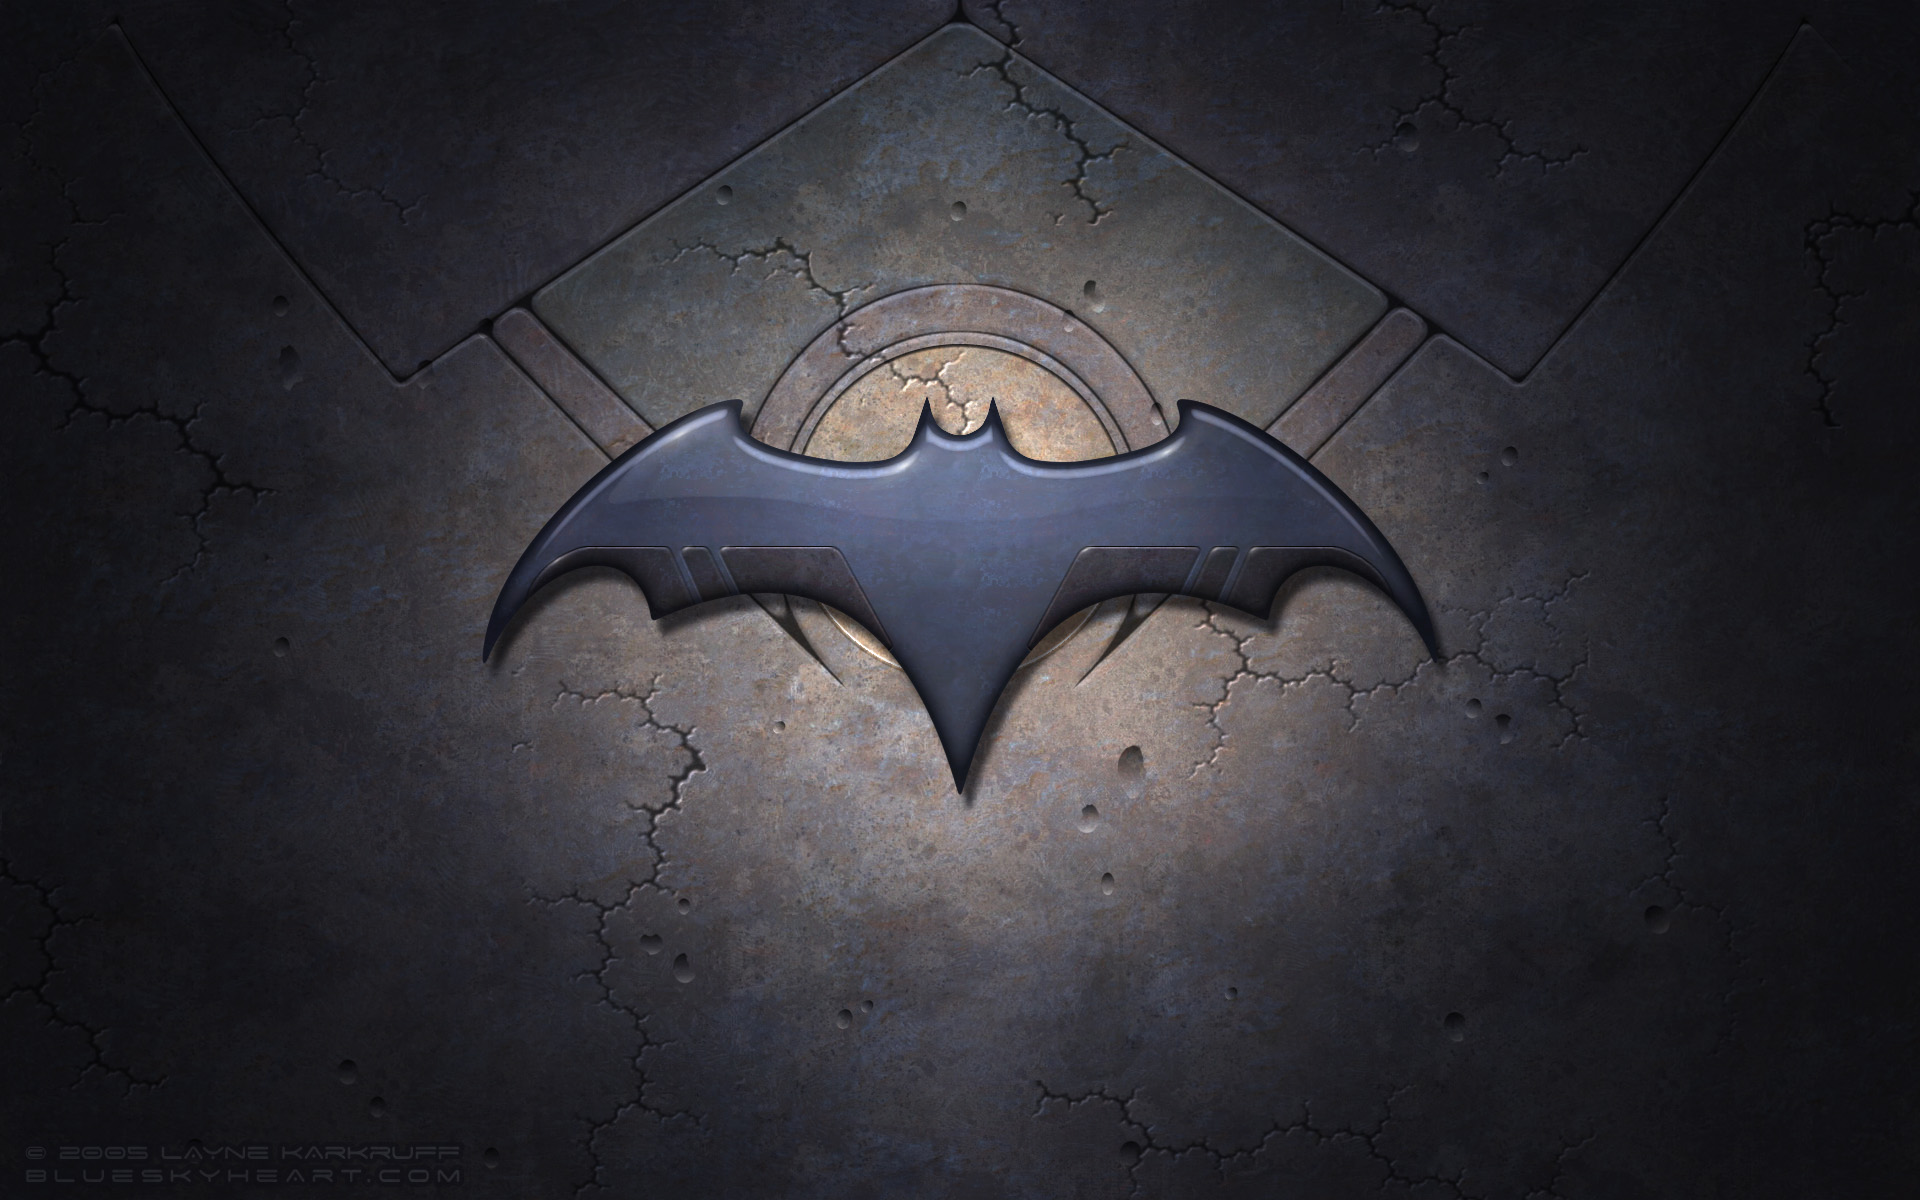 269368 Bild herunterladen comics, the batman, batman logo, batman symbol, logo - Hintergrundbilder und Bildschirmschoner kostenlos